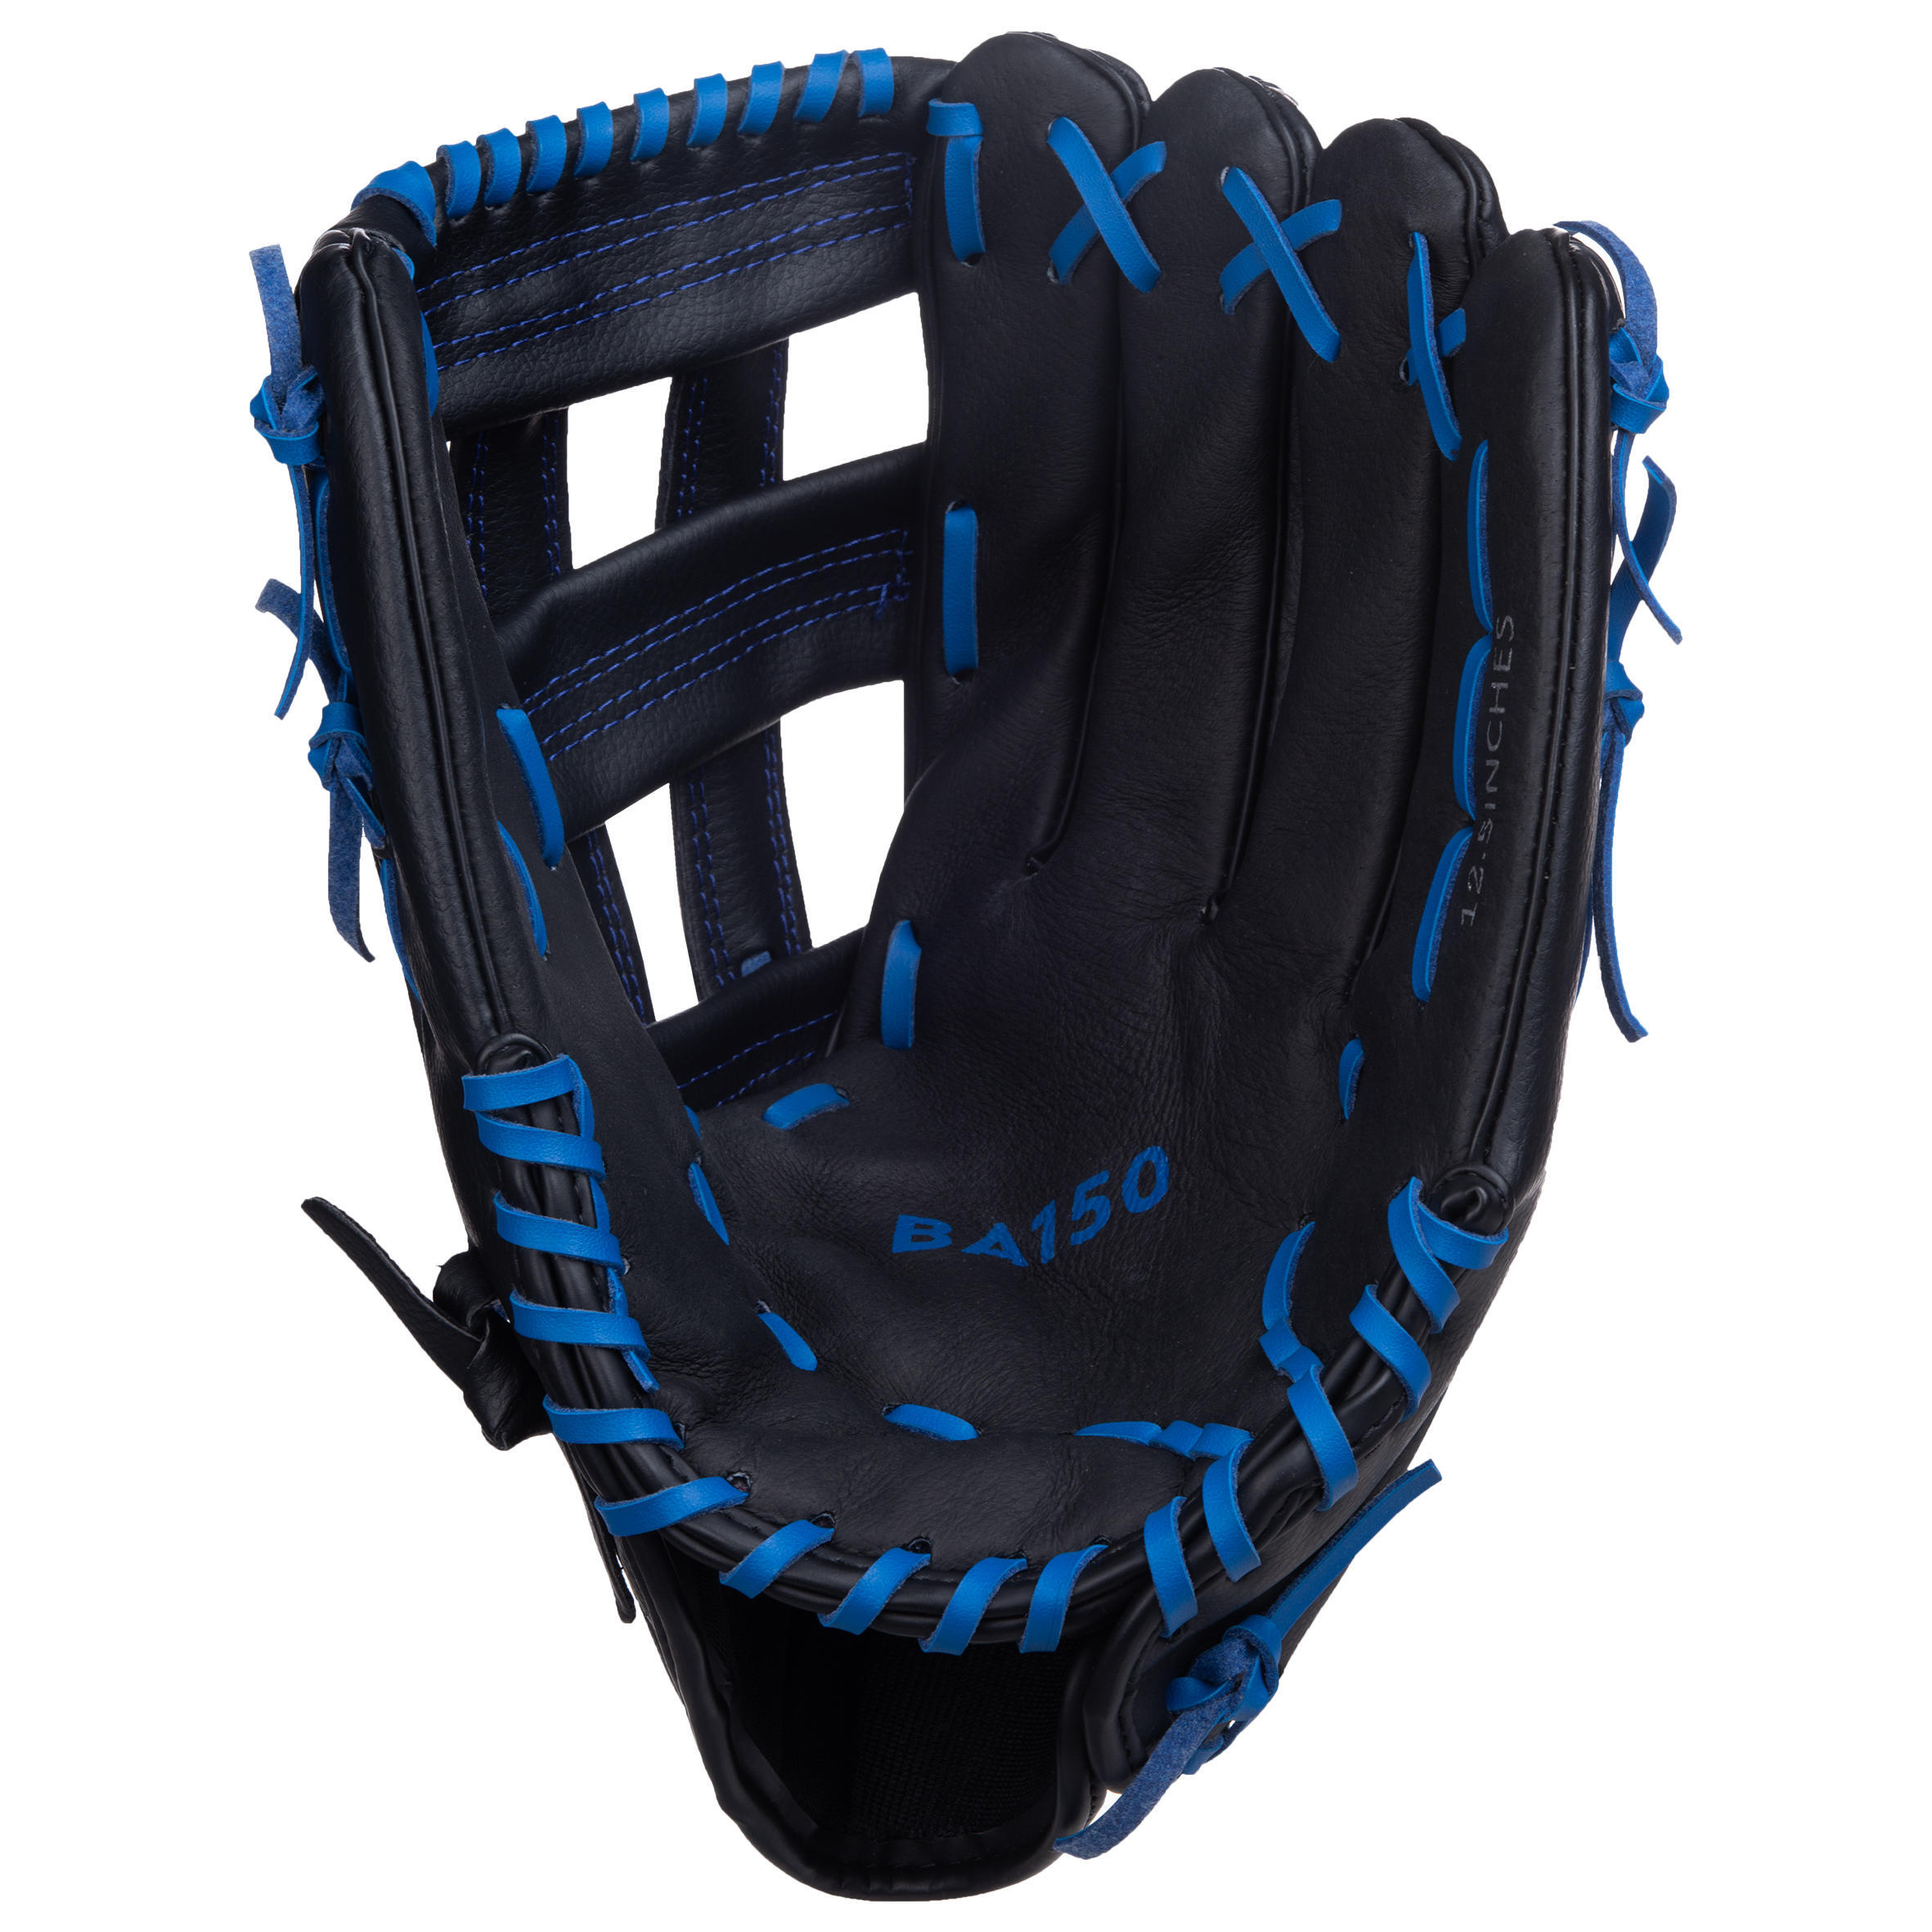 Baseball glove right-hand throw adult -  BA150 blue 4/10